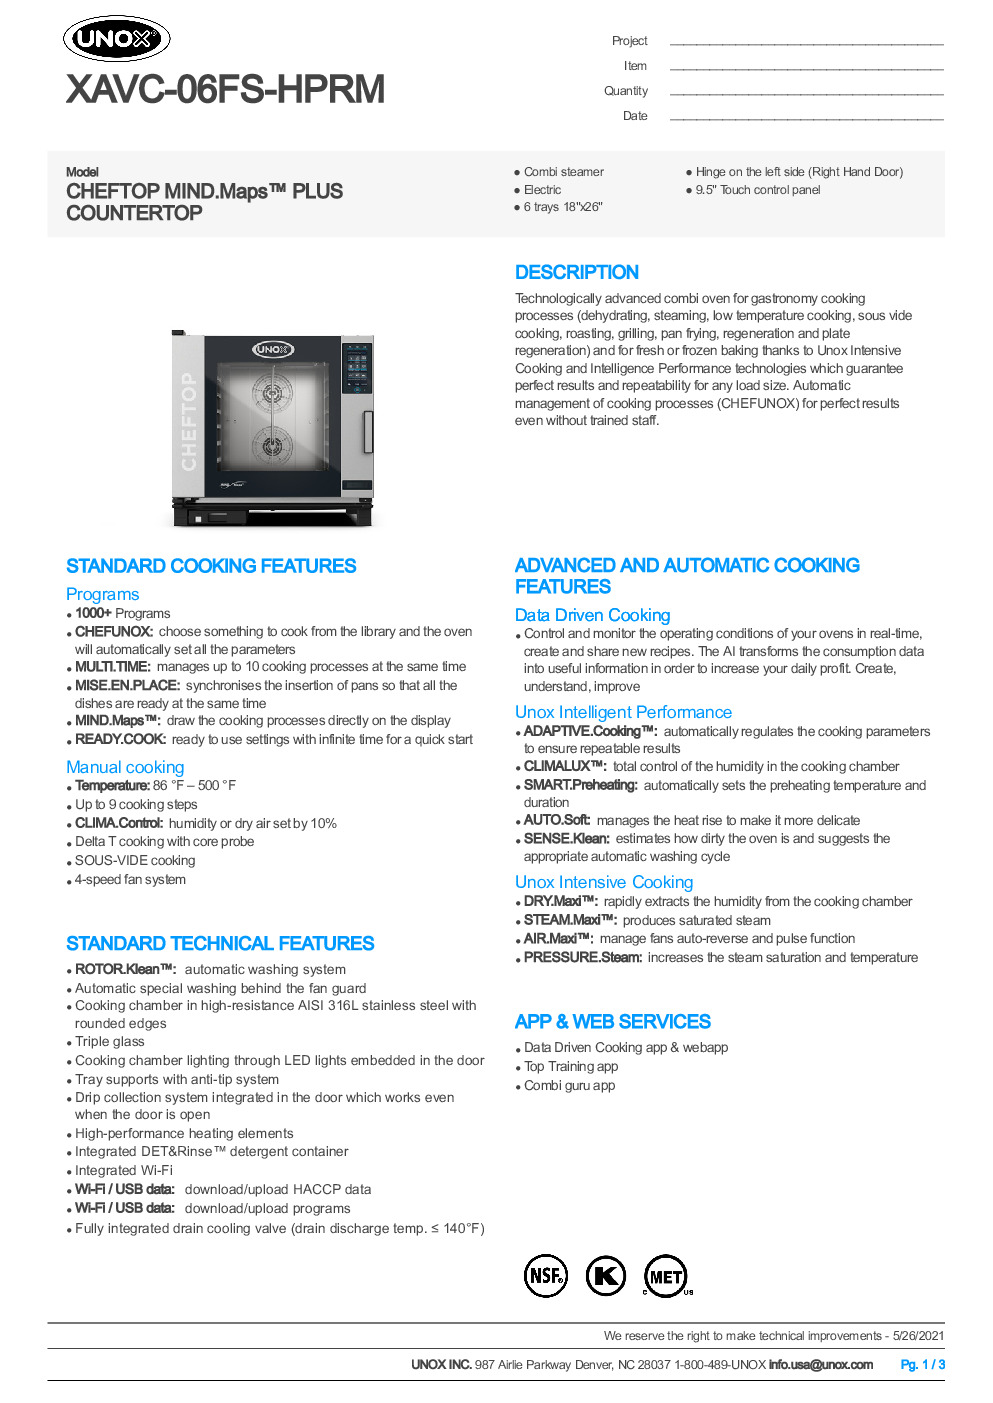 UNOX XAVC-06FS-HPRM Electric Combi Oven